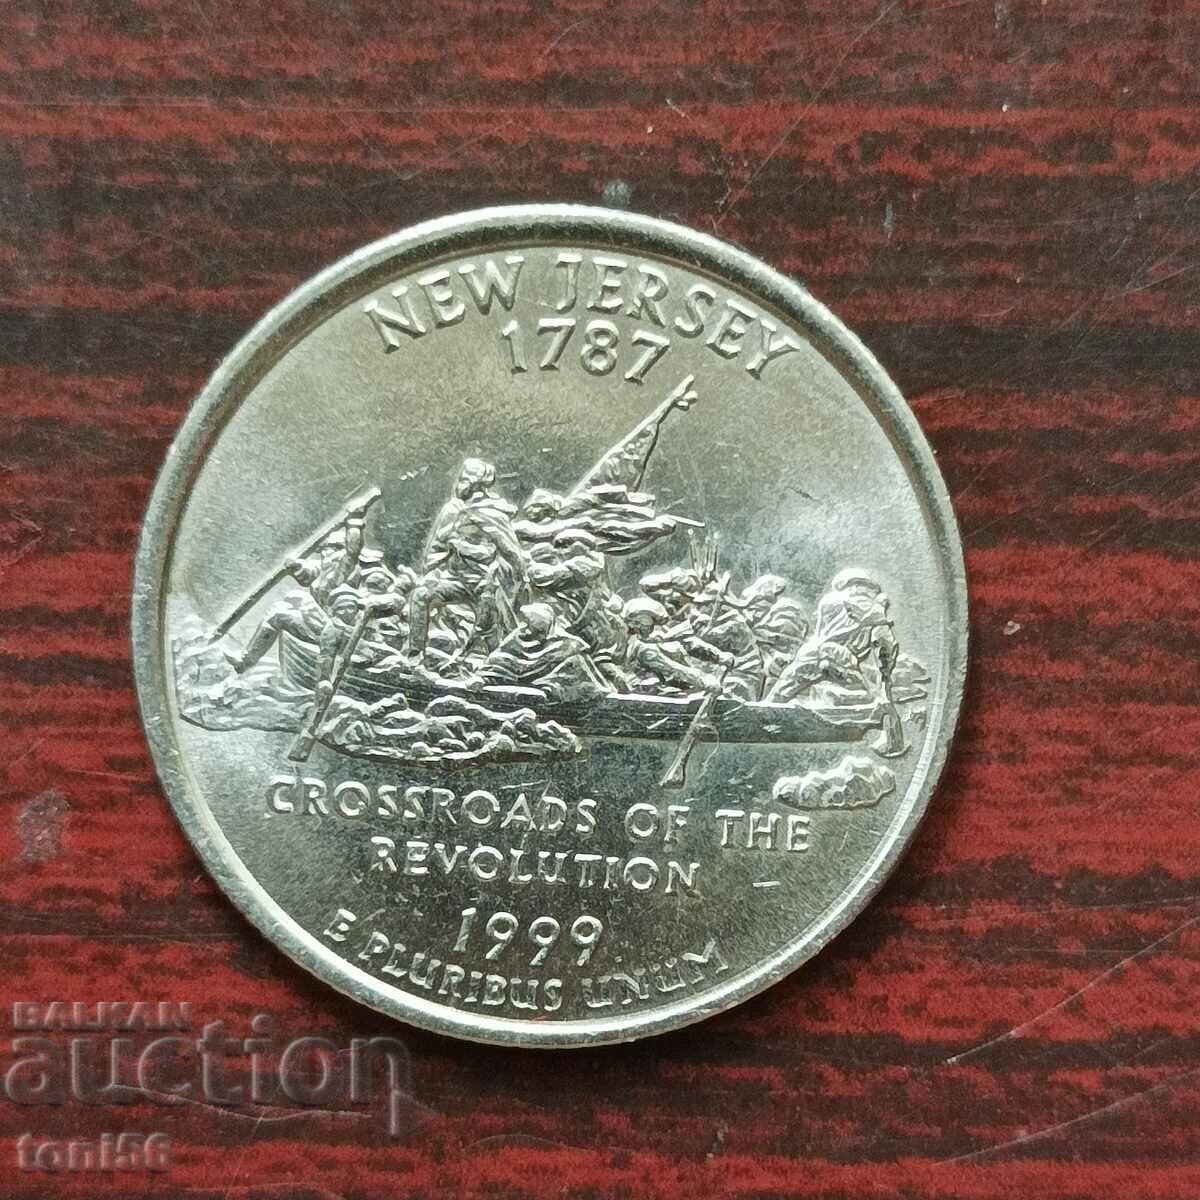 US 1/4 Dollar 1999 P - New Jersey UNC